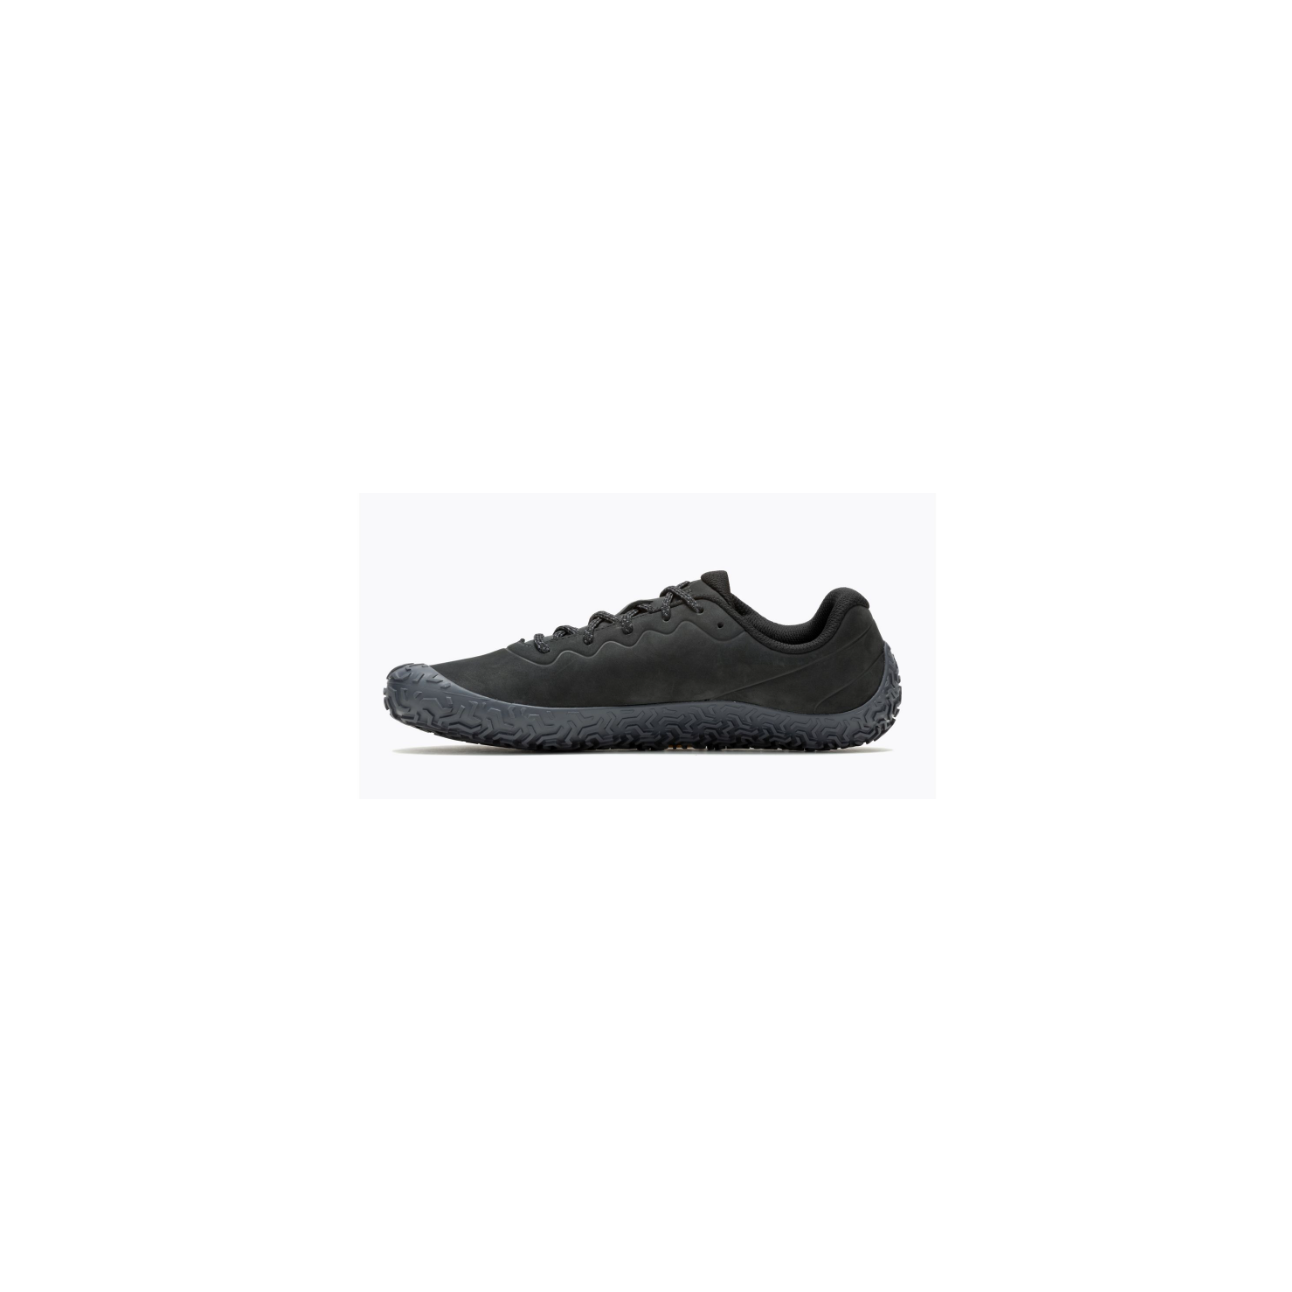 Merrell Zapatillas Barefoot Hombre - Vapor Glove 6 LTR - negro